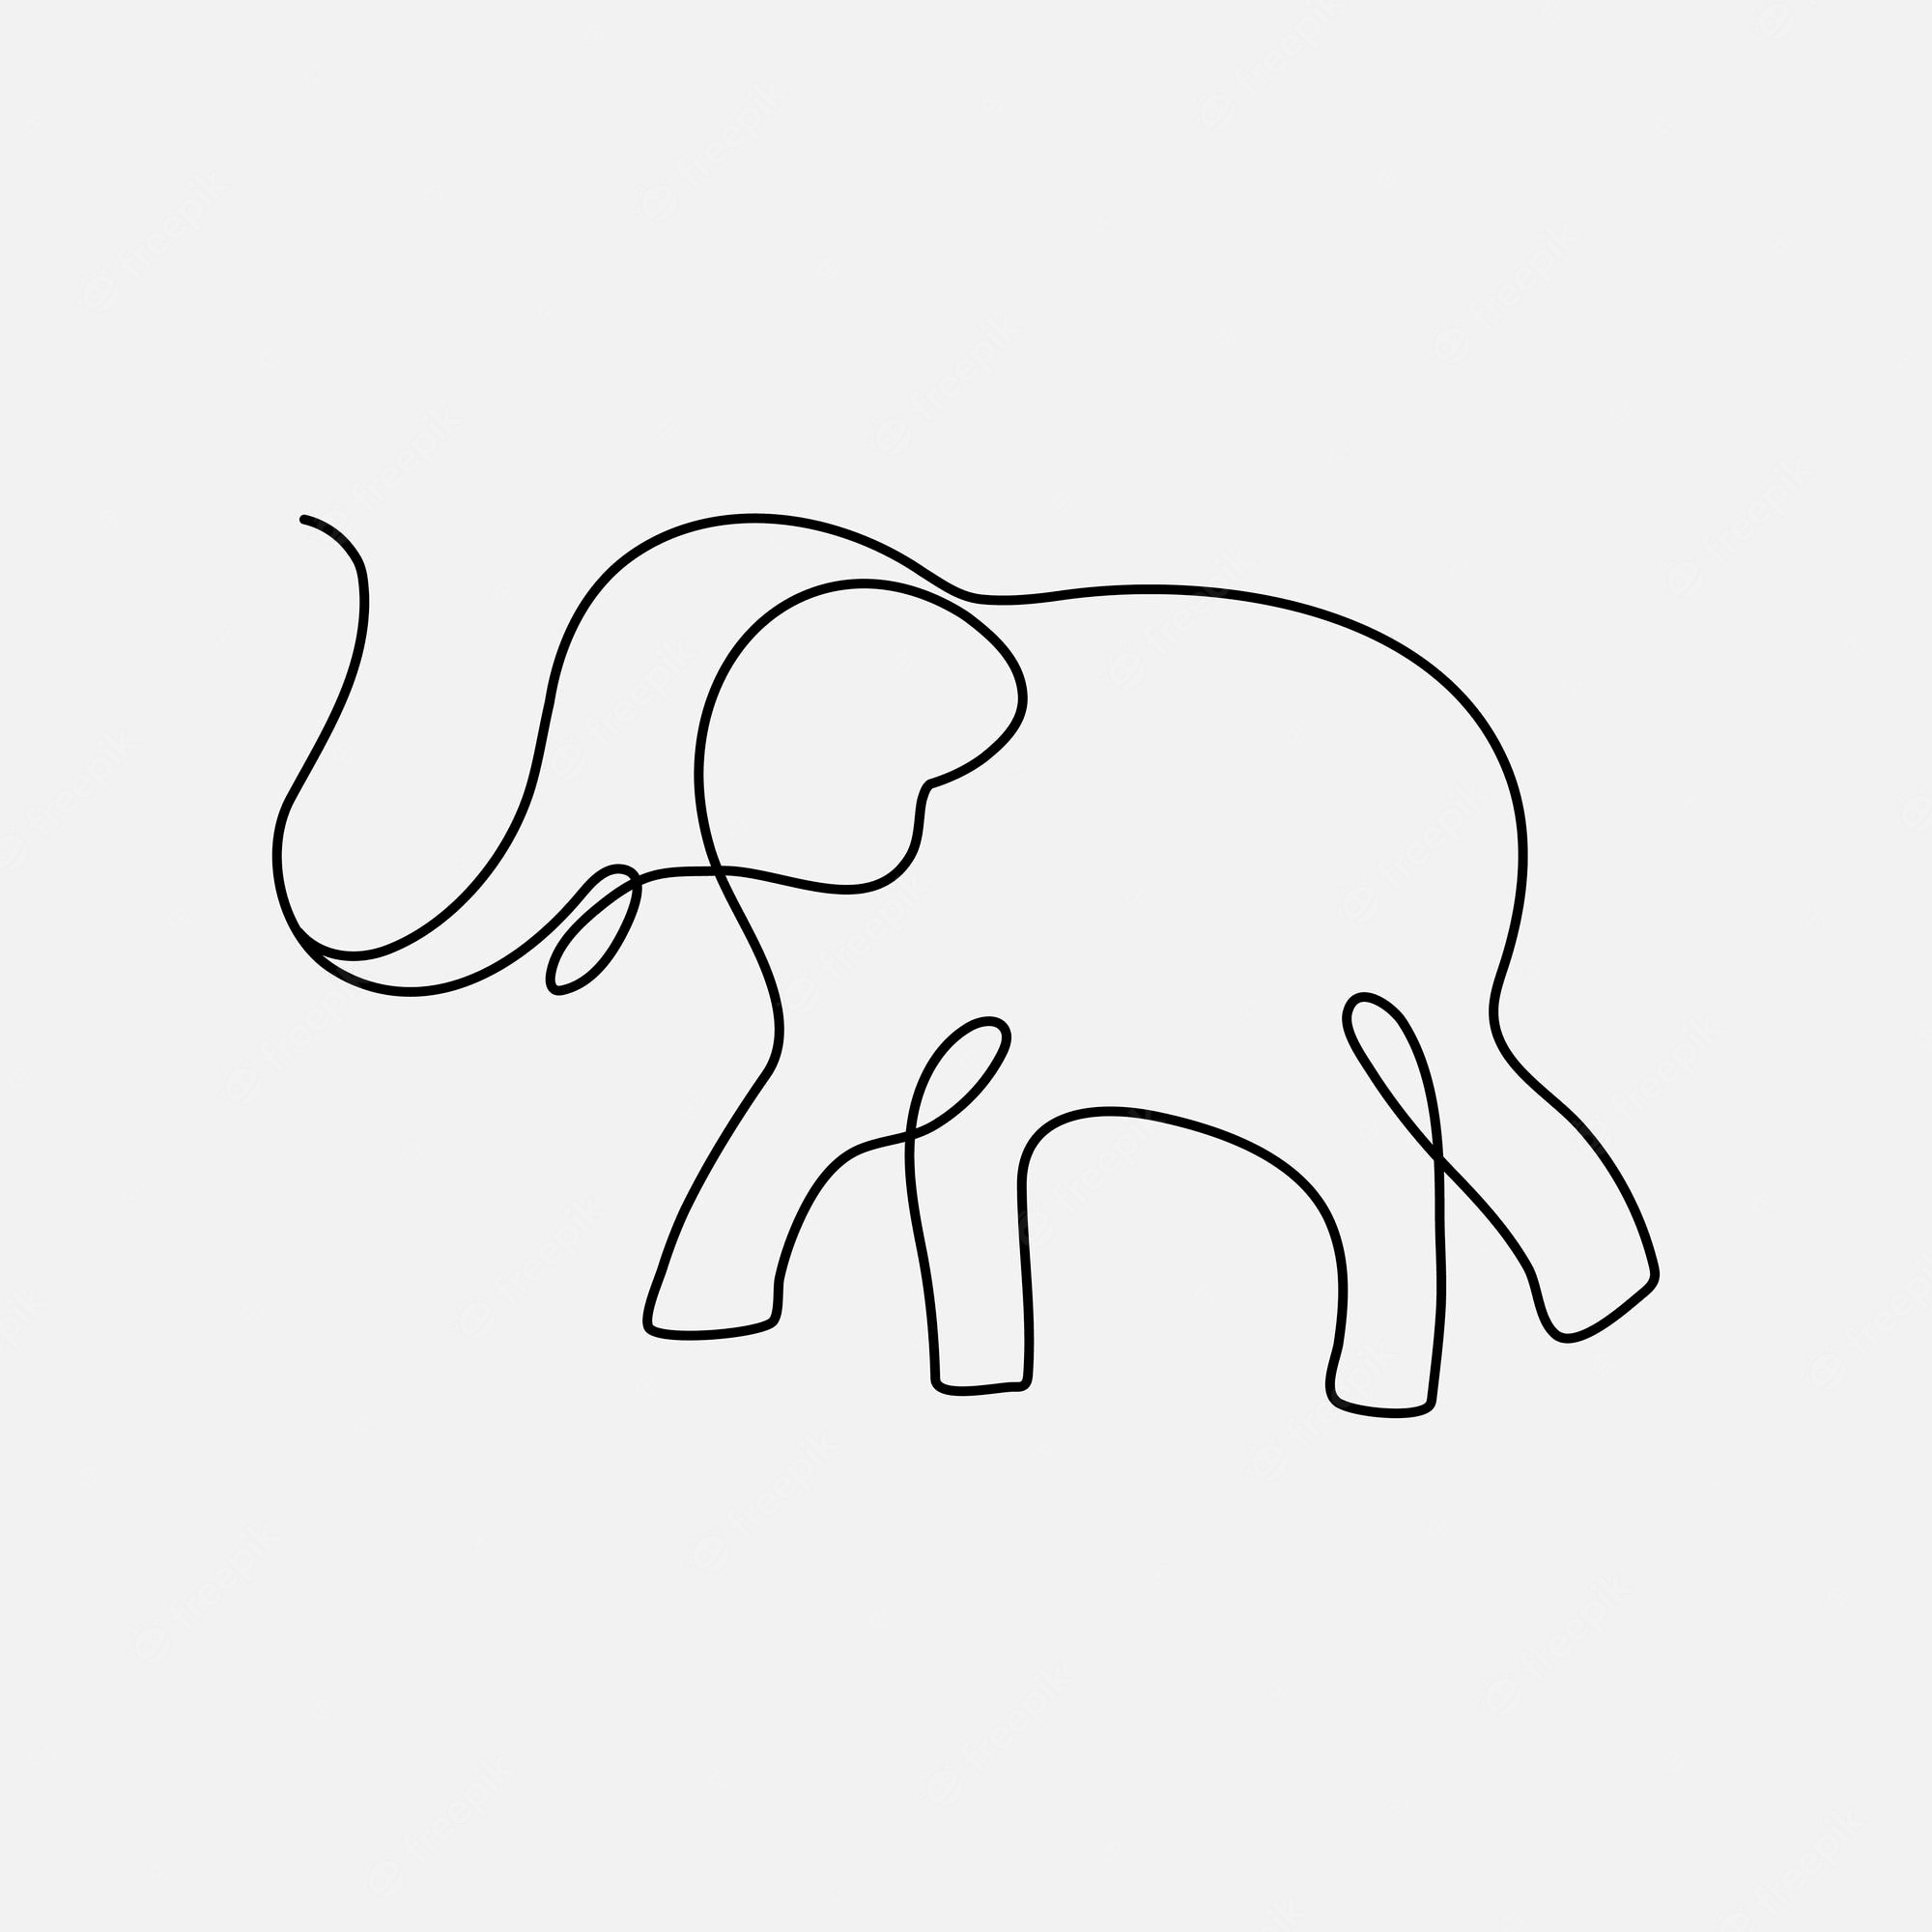 Elephant logo Images  Free Vectors, Stock Photos & PSD Pertaining To Blank Elephant Template